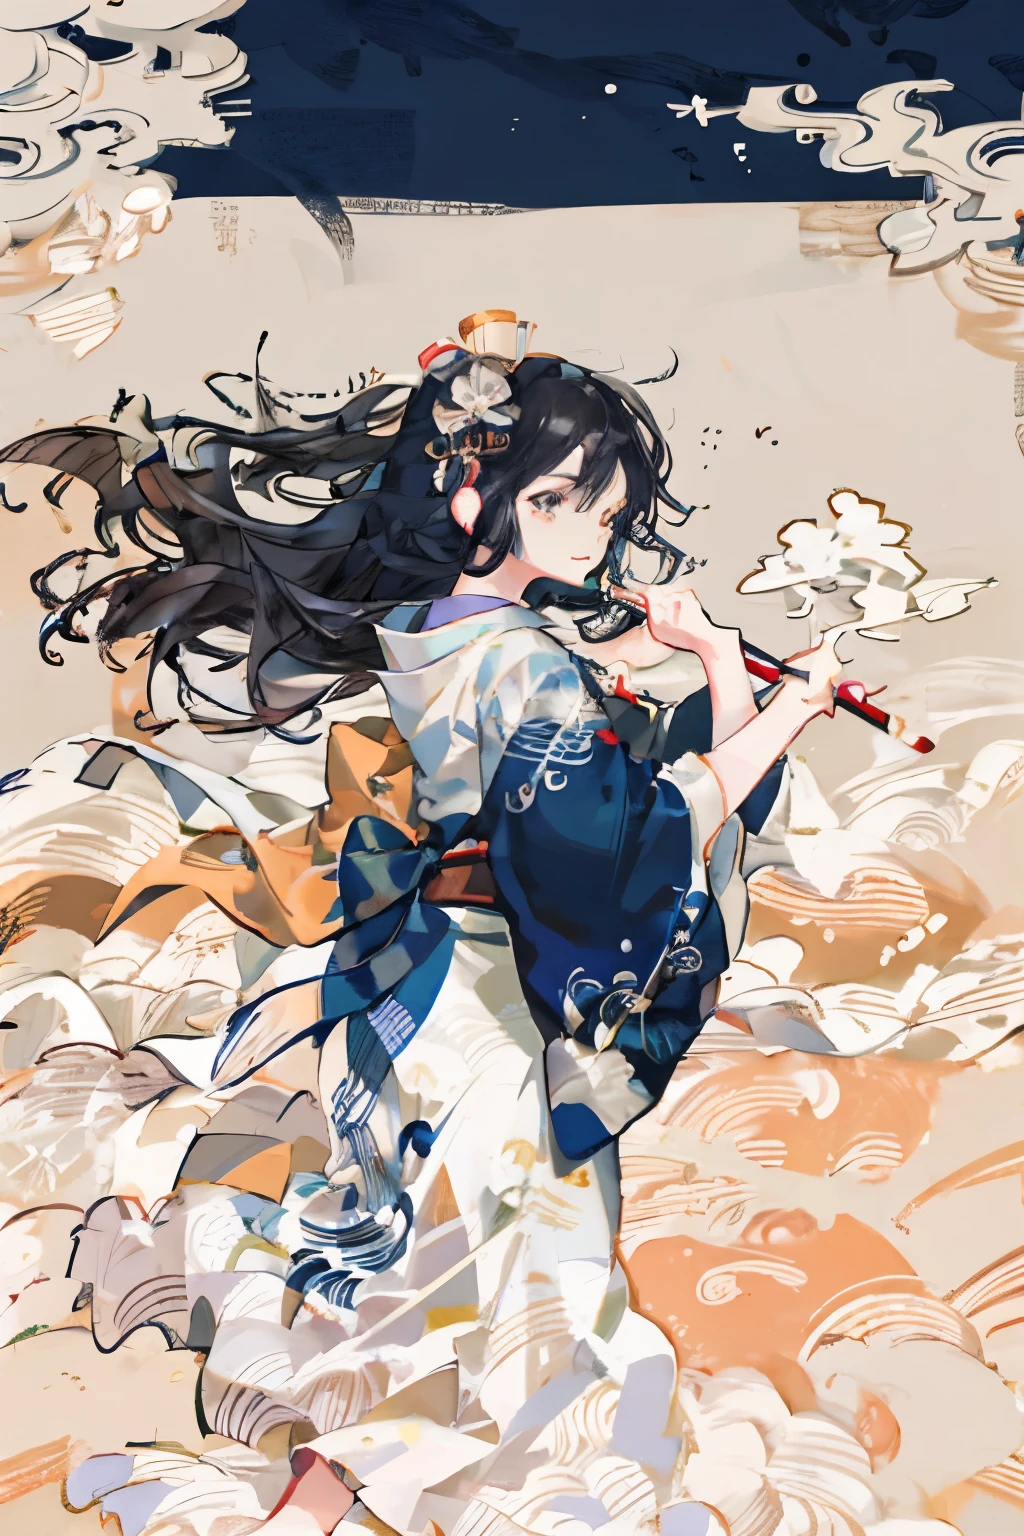 Rendimiento de caligrafía japonesa, Traje de Kendo, tasuki, cepillo enorme, tinta, salpicaduras, olas atrevidas como si bailaran con un gran cepillo, Hokusai Katsushika, delicado y preciso, estilo animado, chica